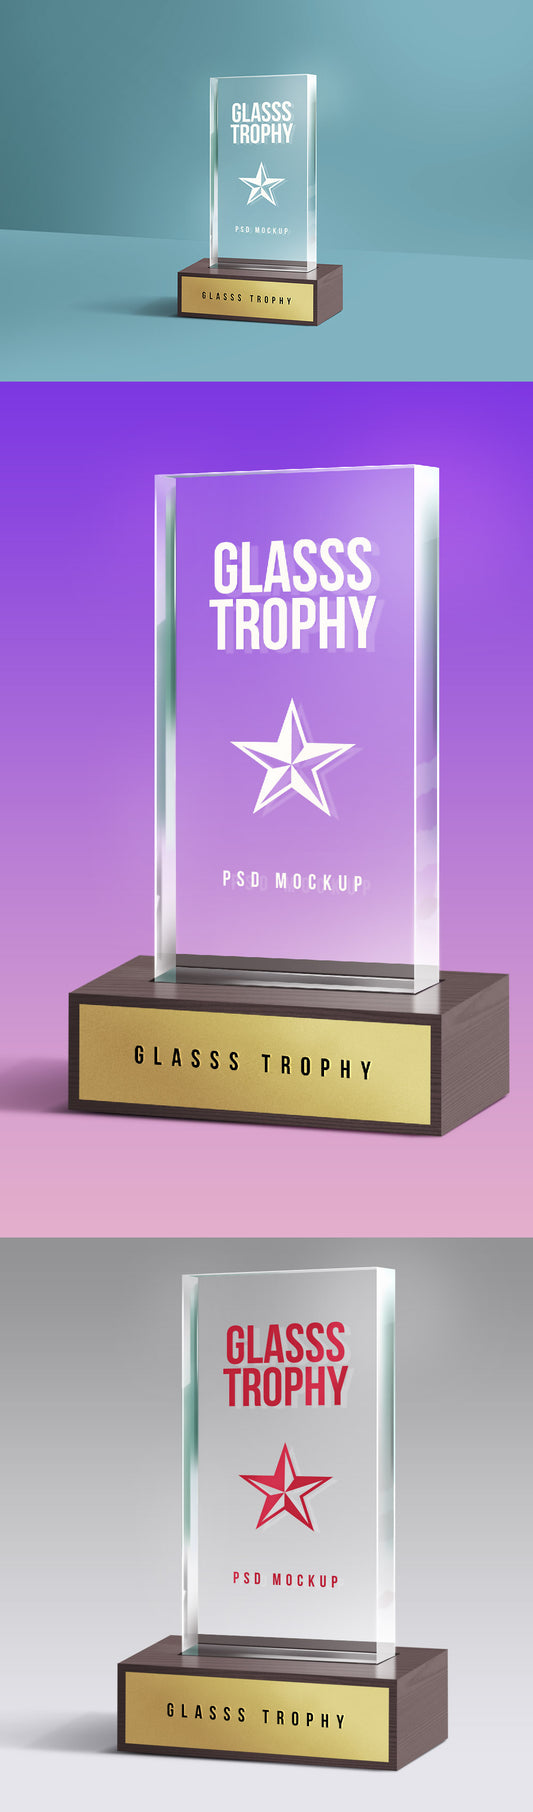 Free Glass Trophy PSD Mockup